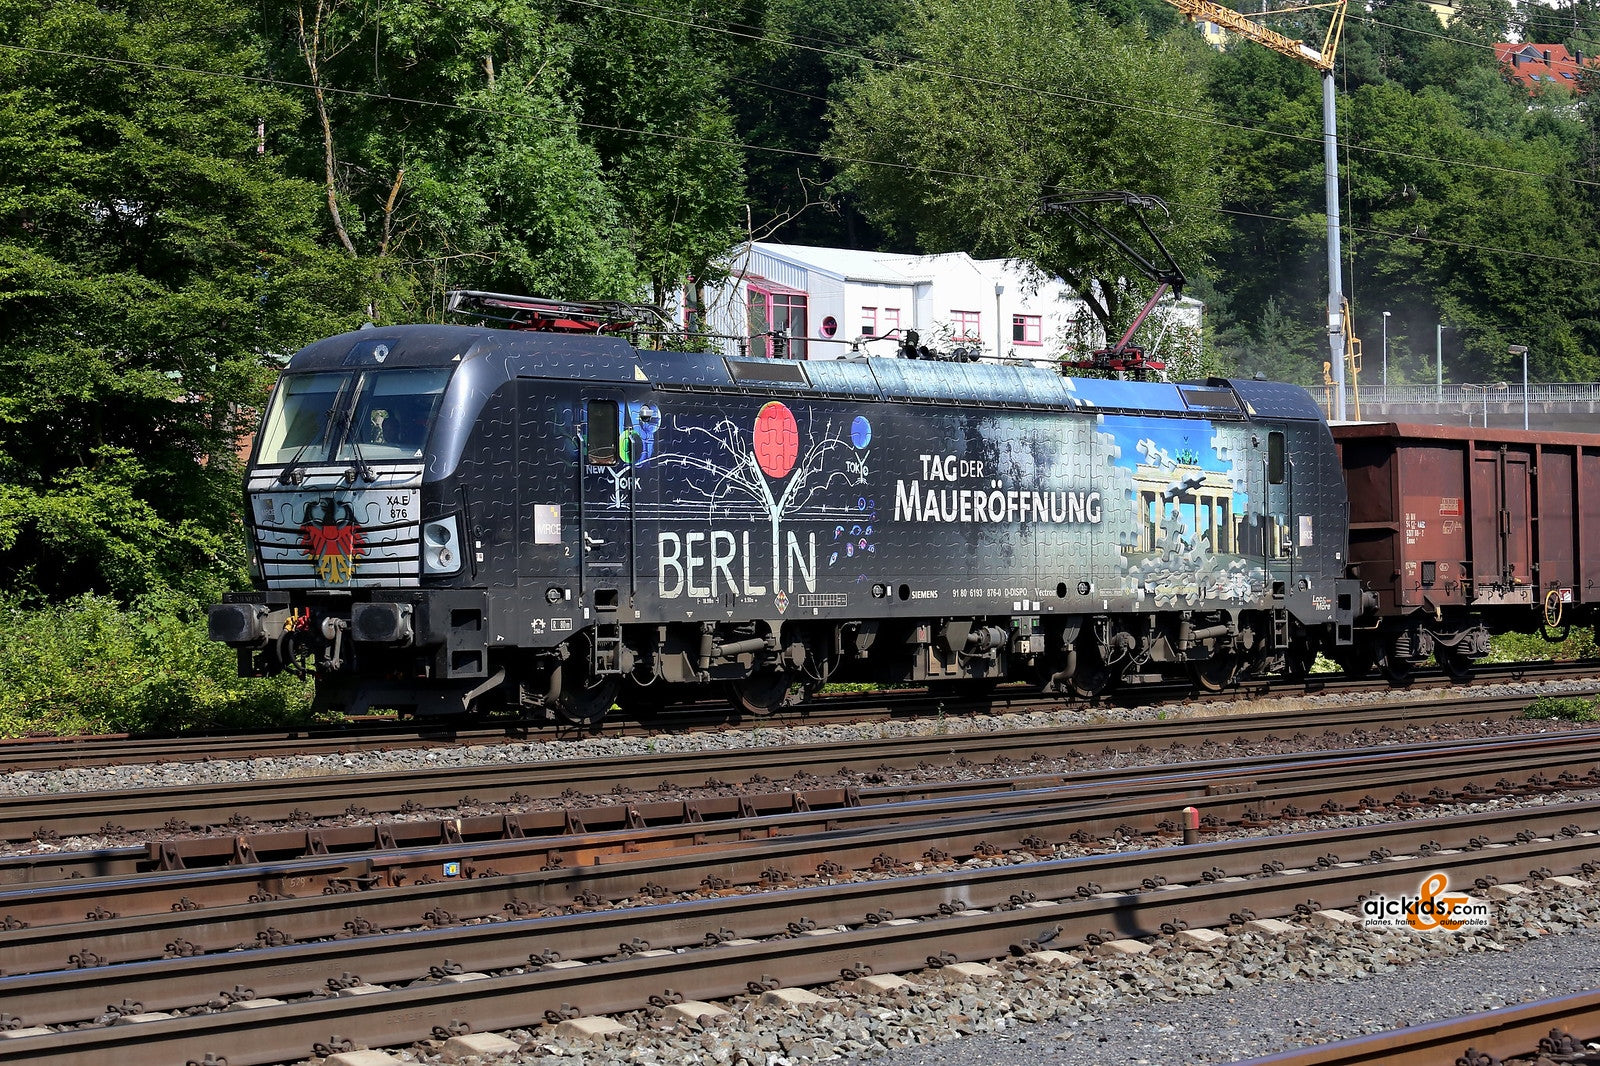 Marklin 36194 - Class 193 Electric Locomotive at Ajckids.com